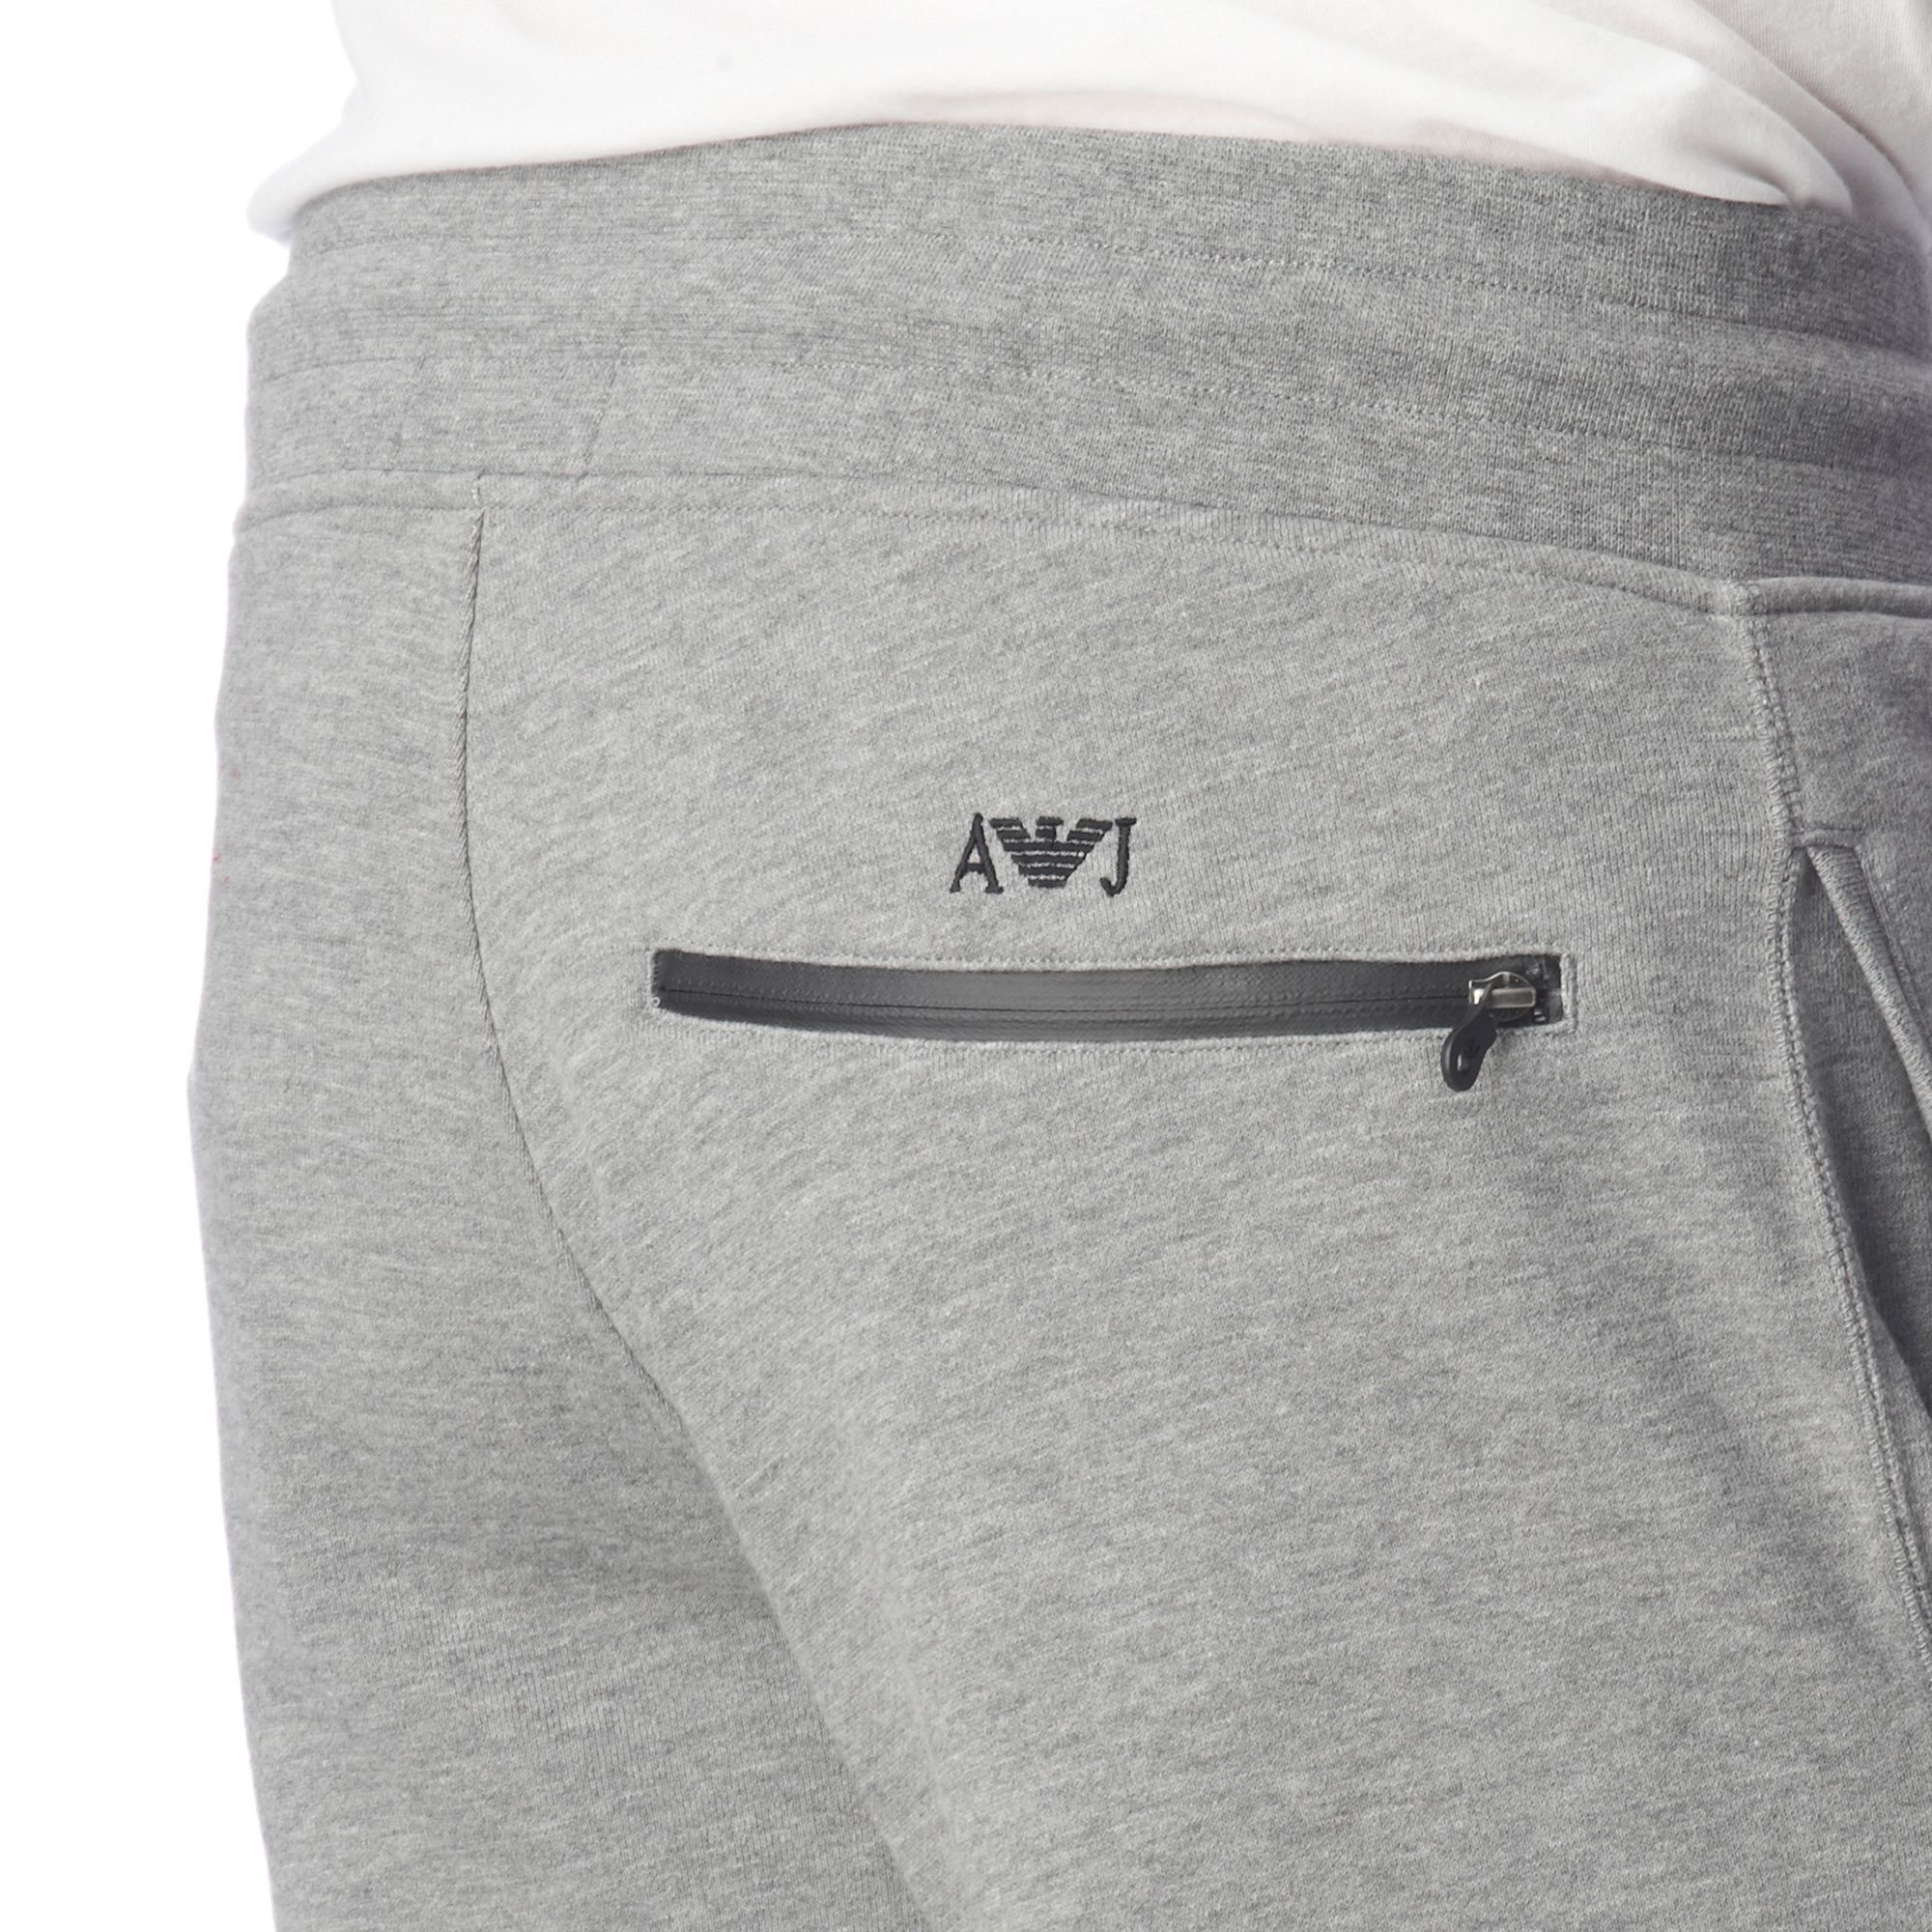 armani jeans logo jogging bottoms